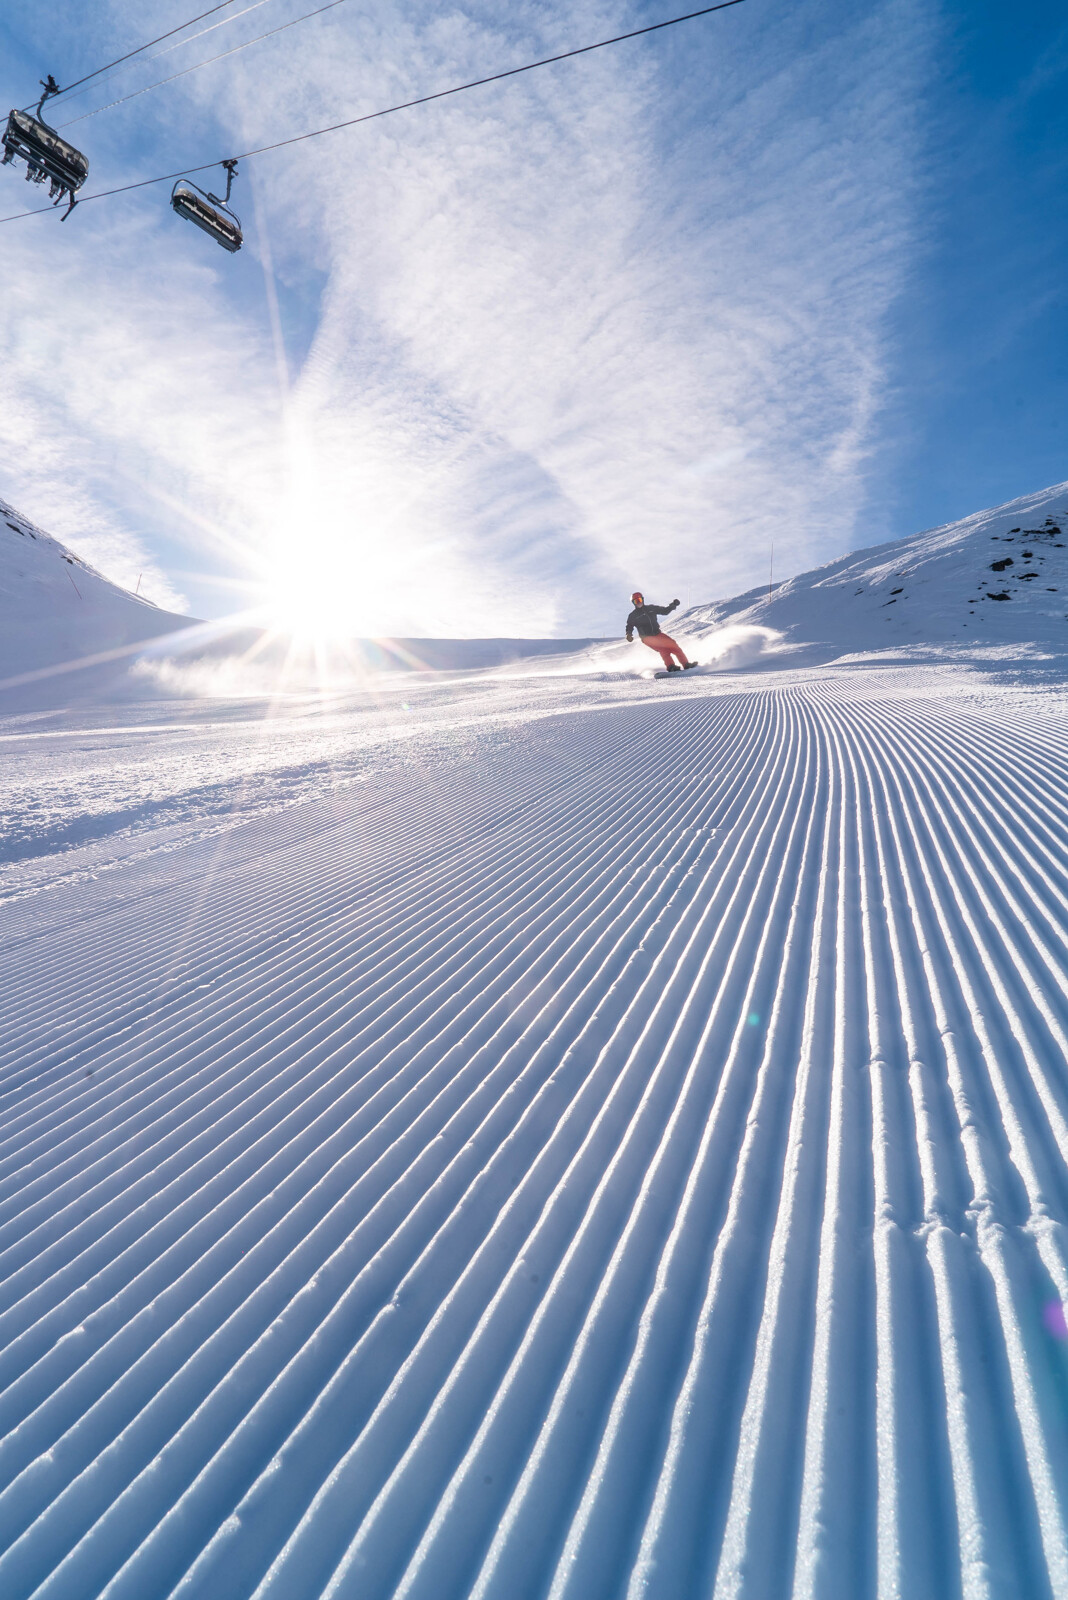 Find freshly groomed ski runs in the 3 Valleys